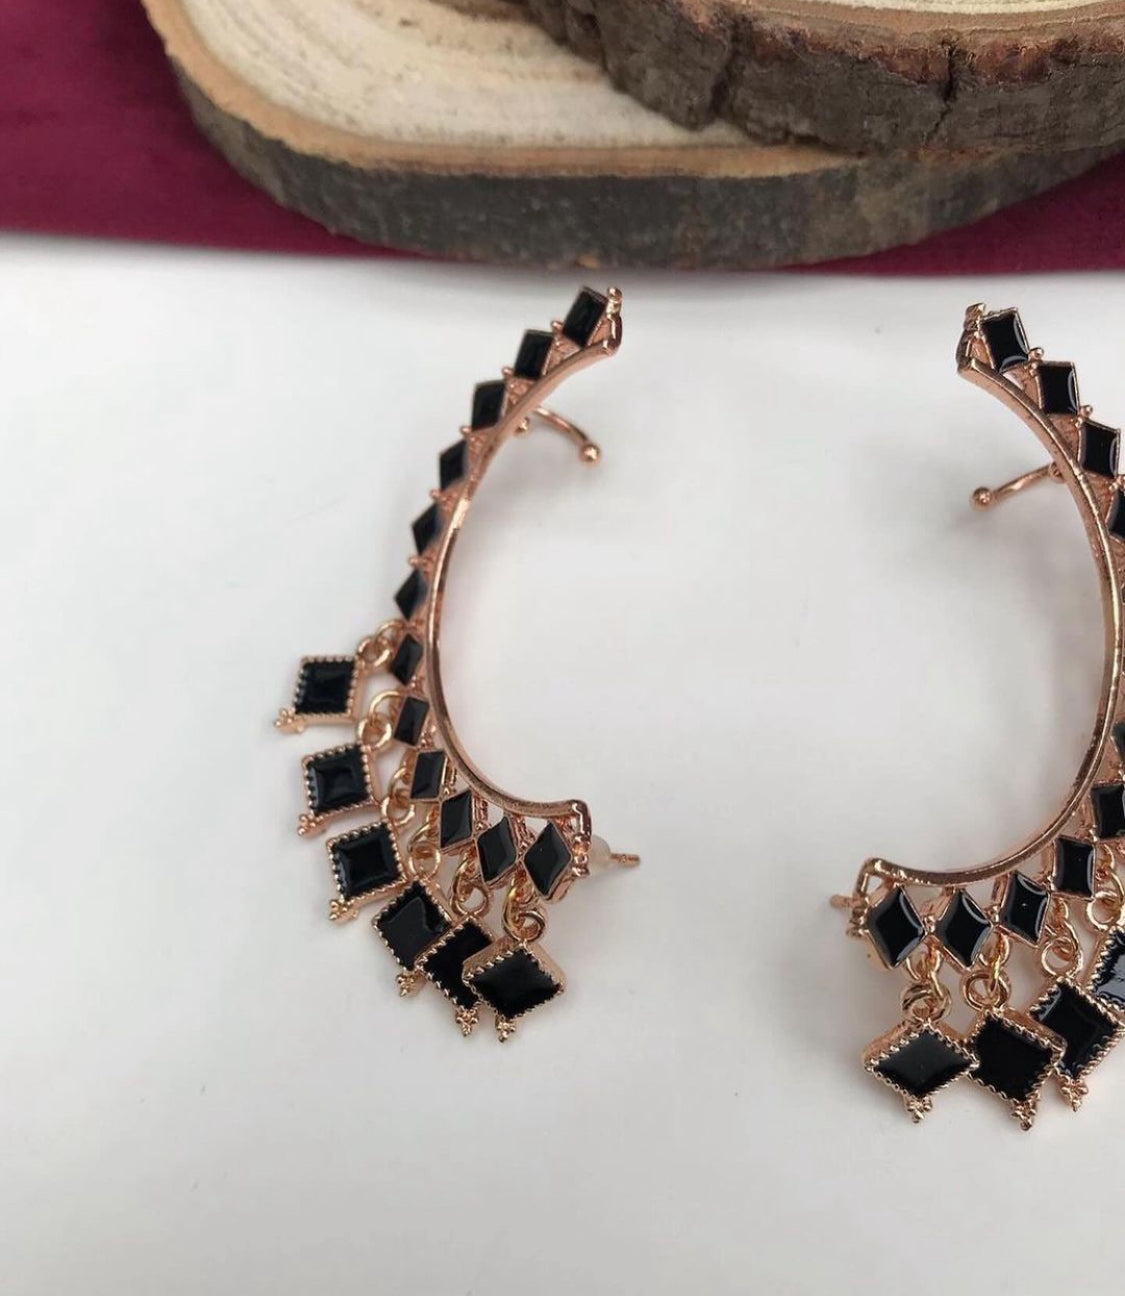 Minimal earcuff earrings - Shopeology